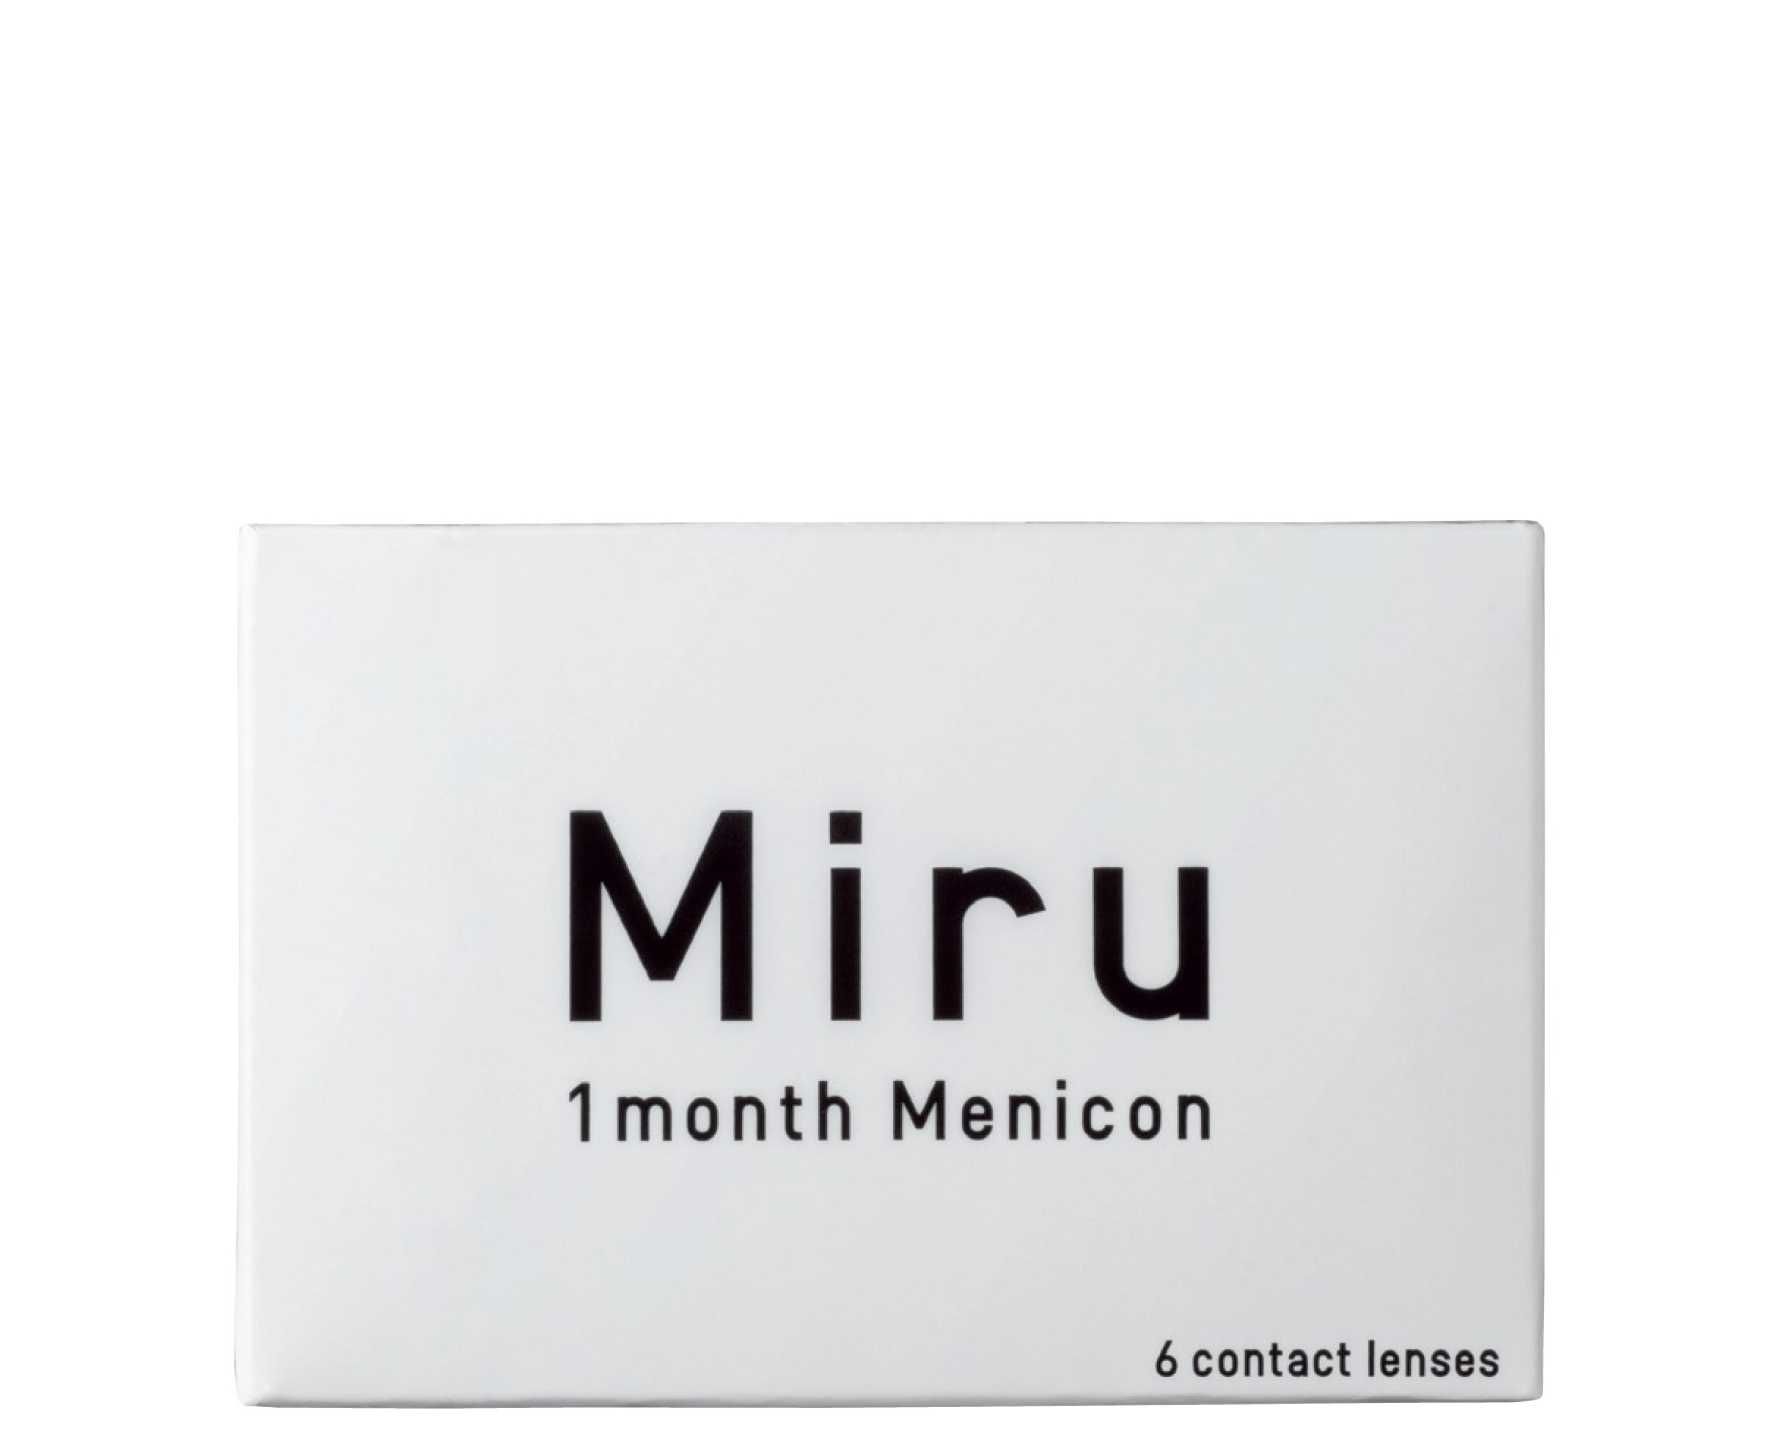  MIRU 1 month MENICON